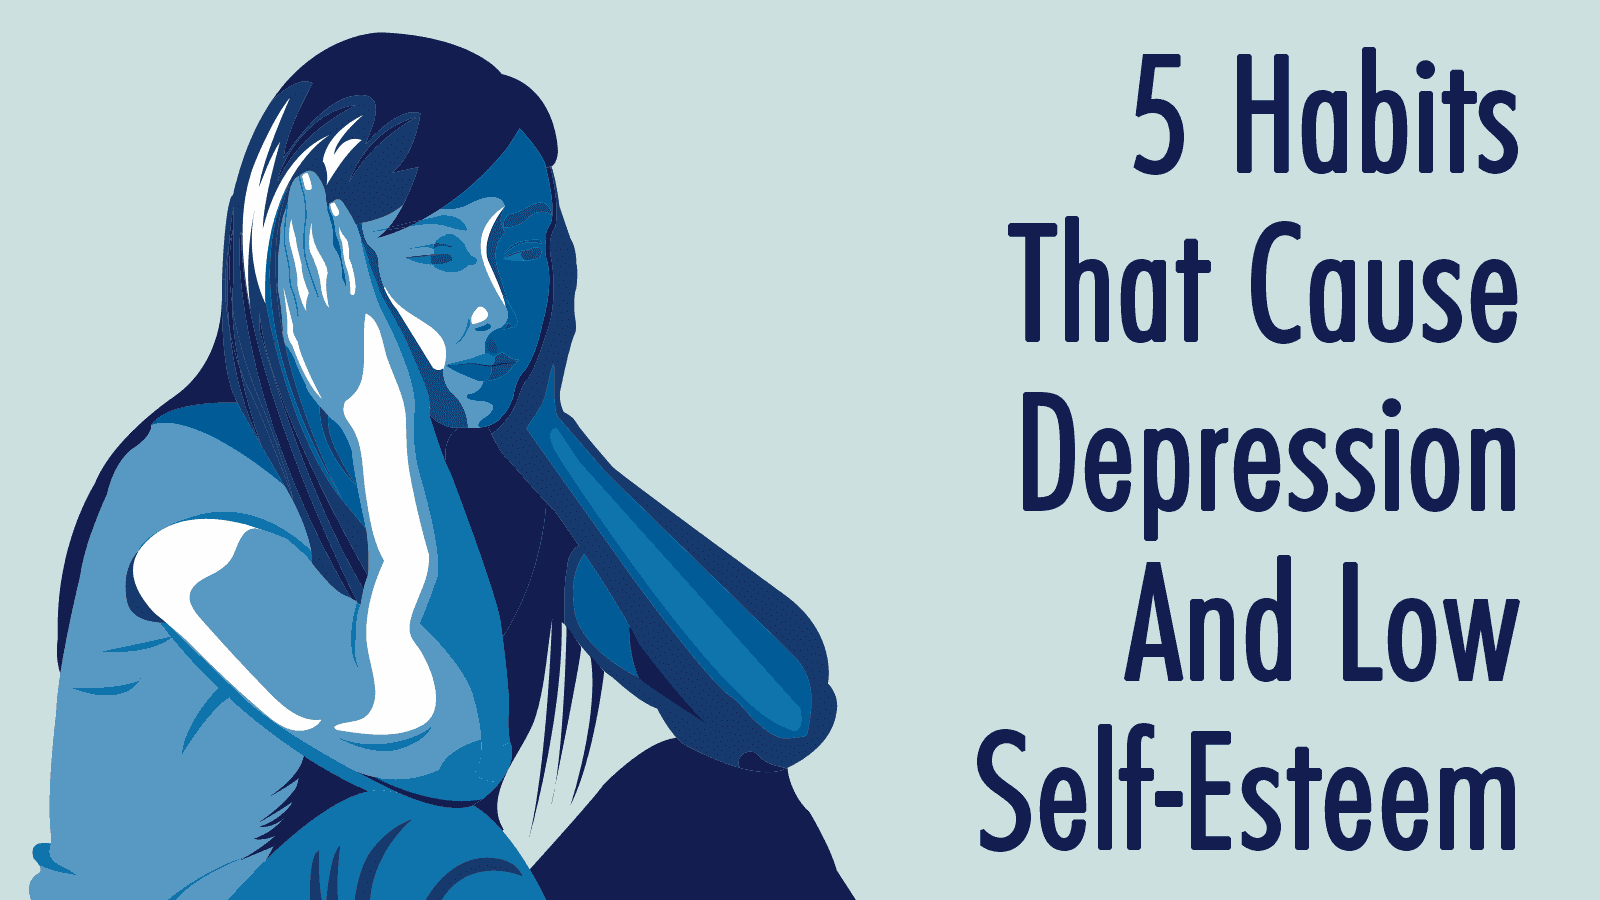 5 Habits That Cause Depression And Low Self-Esteem